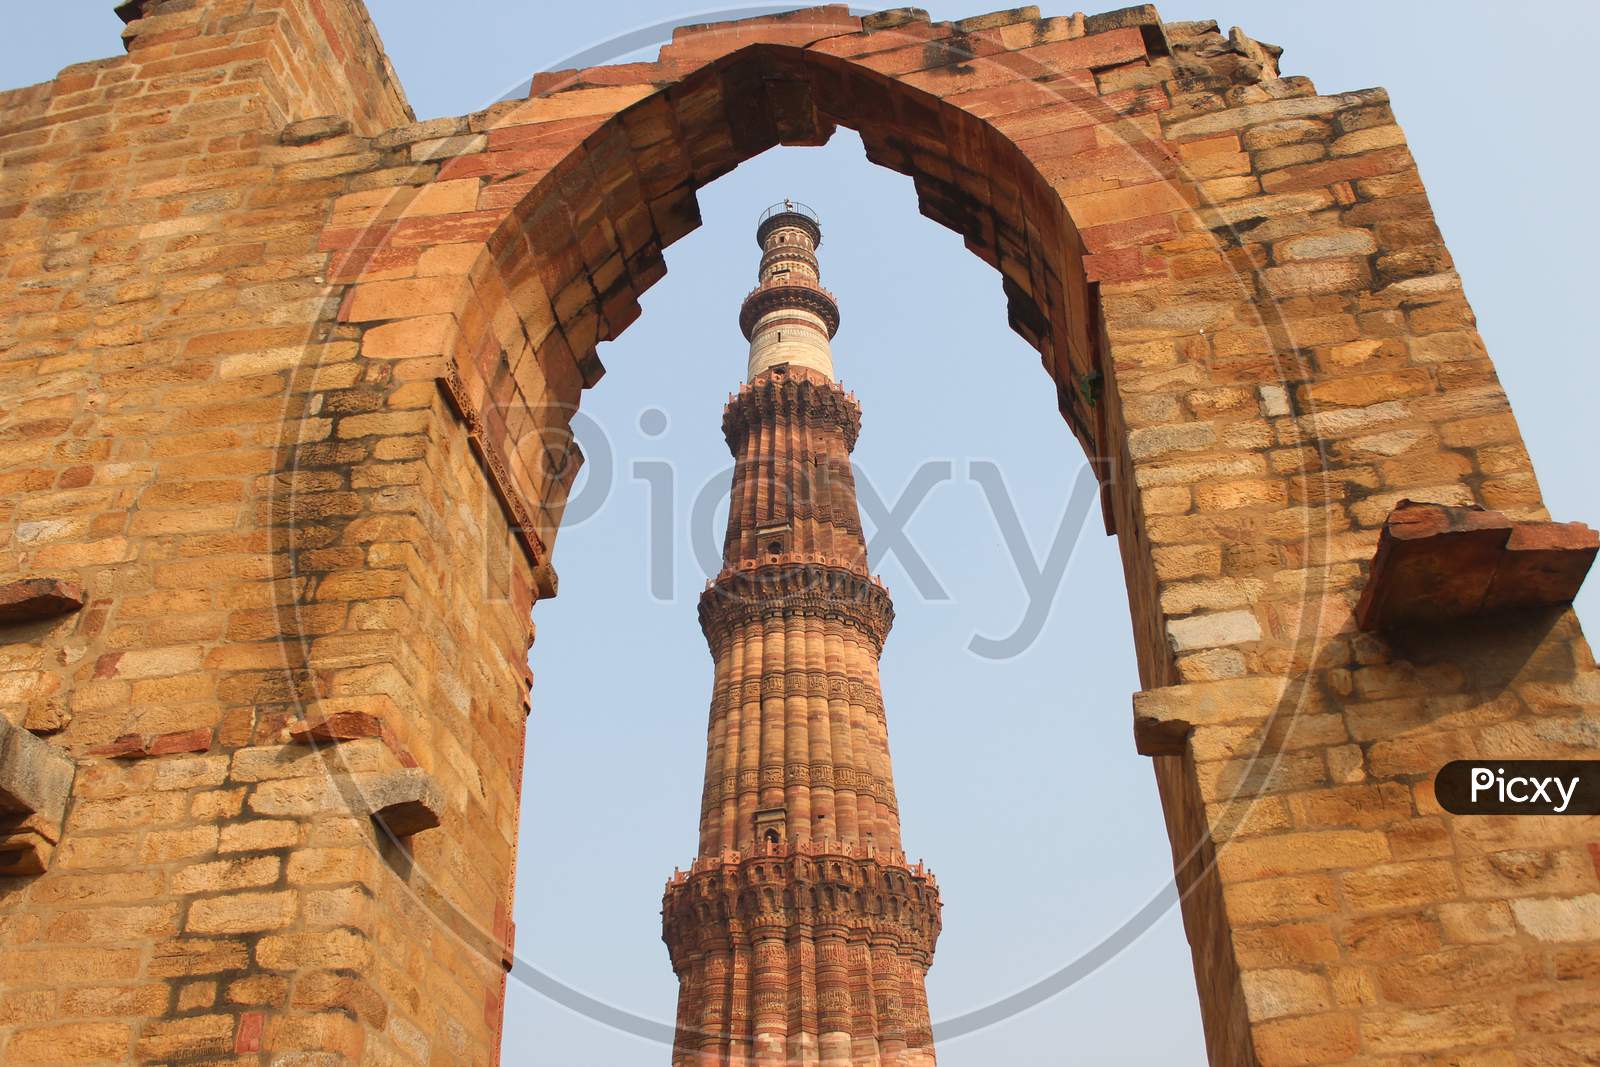 This picture shows qutub minar